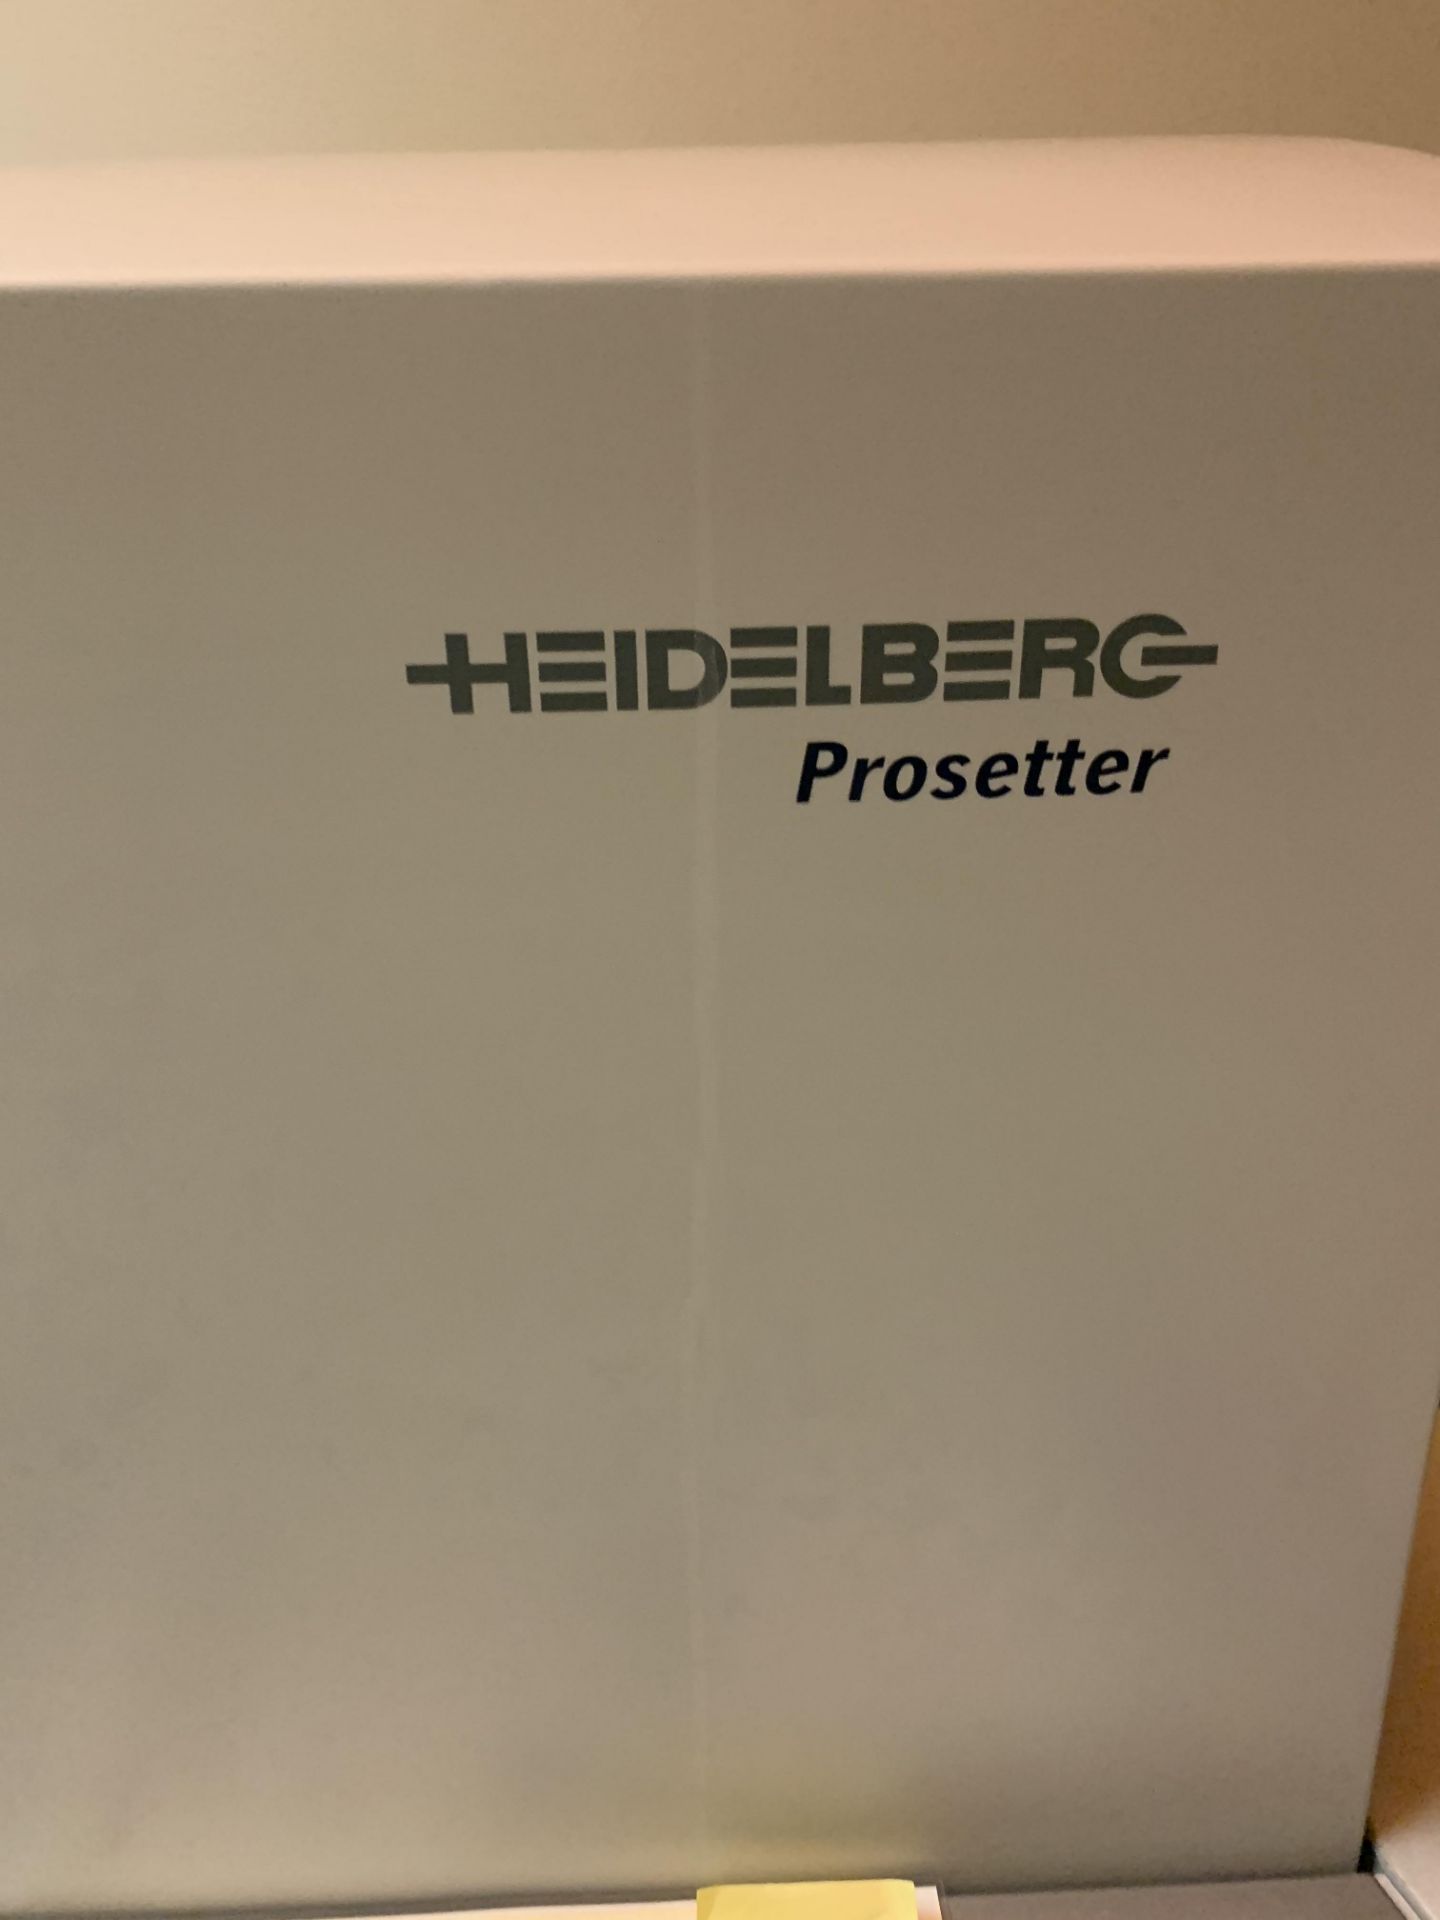 Heidelberg Prosetter Type 2170 S/N 034030199 With Rip - Image 4 of 9